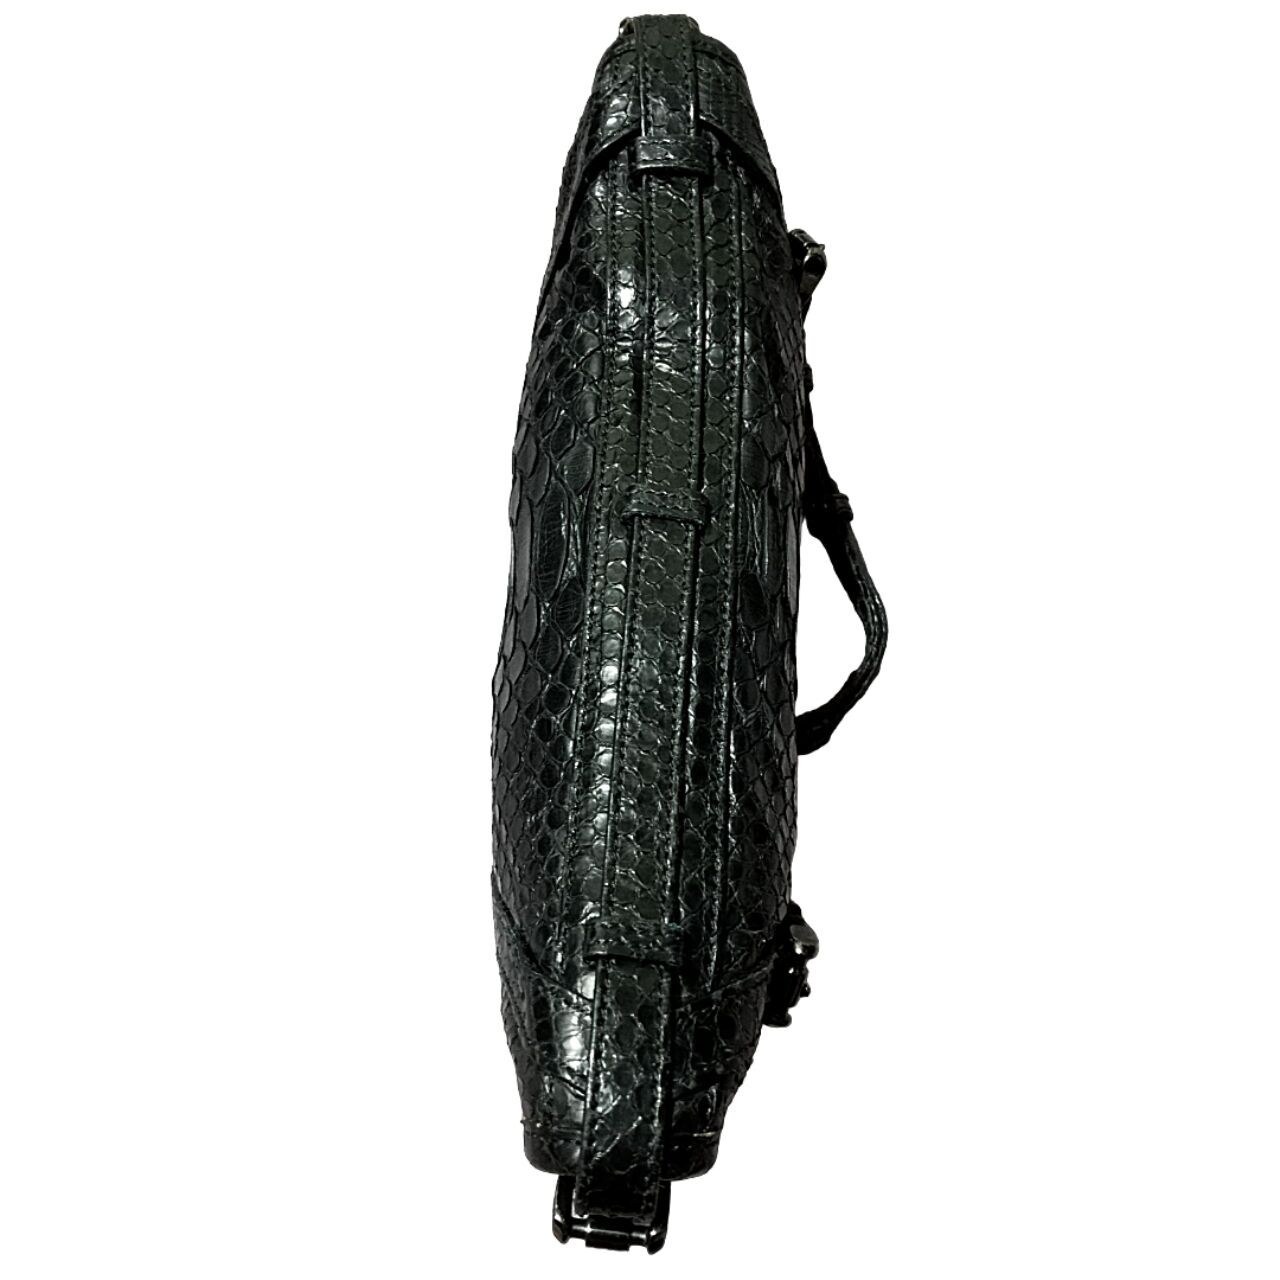 Burberry Prorsum Black Reptile Clutch - Wristlet Bag